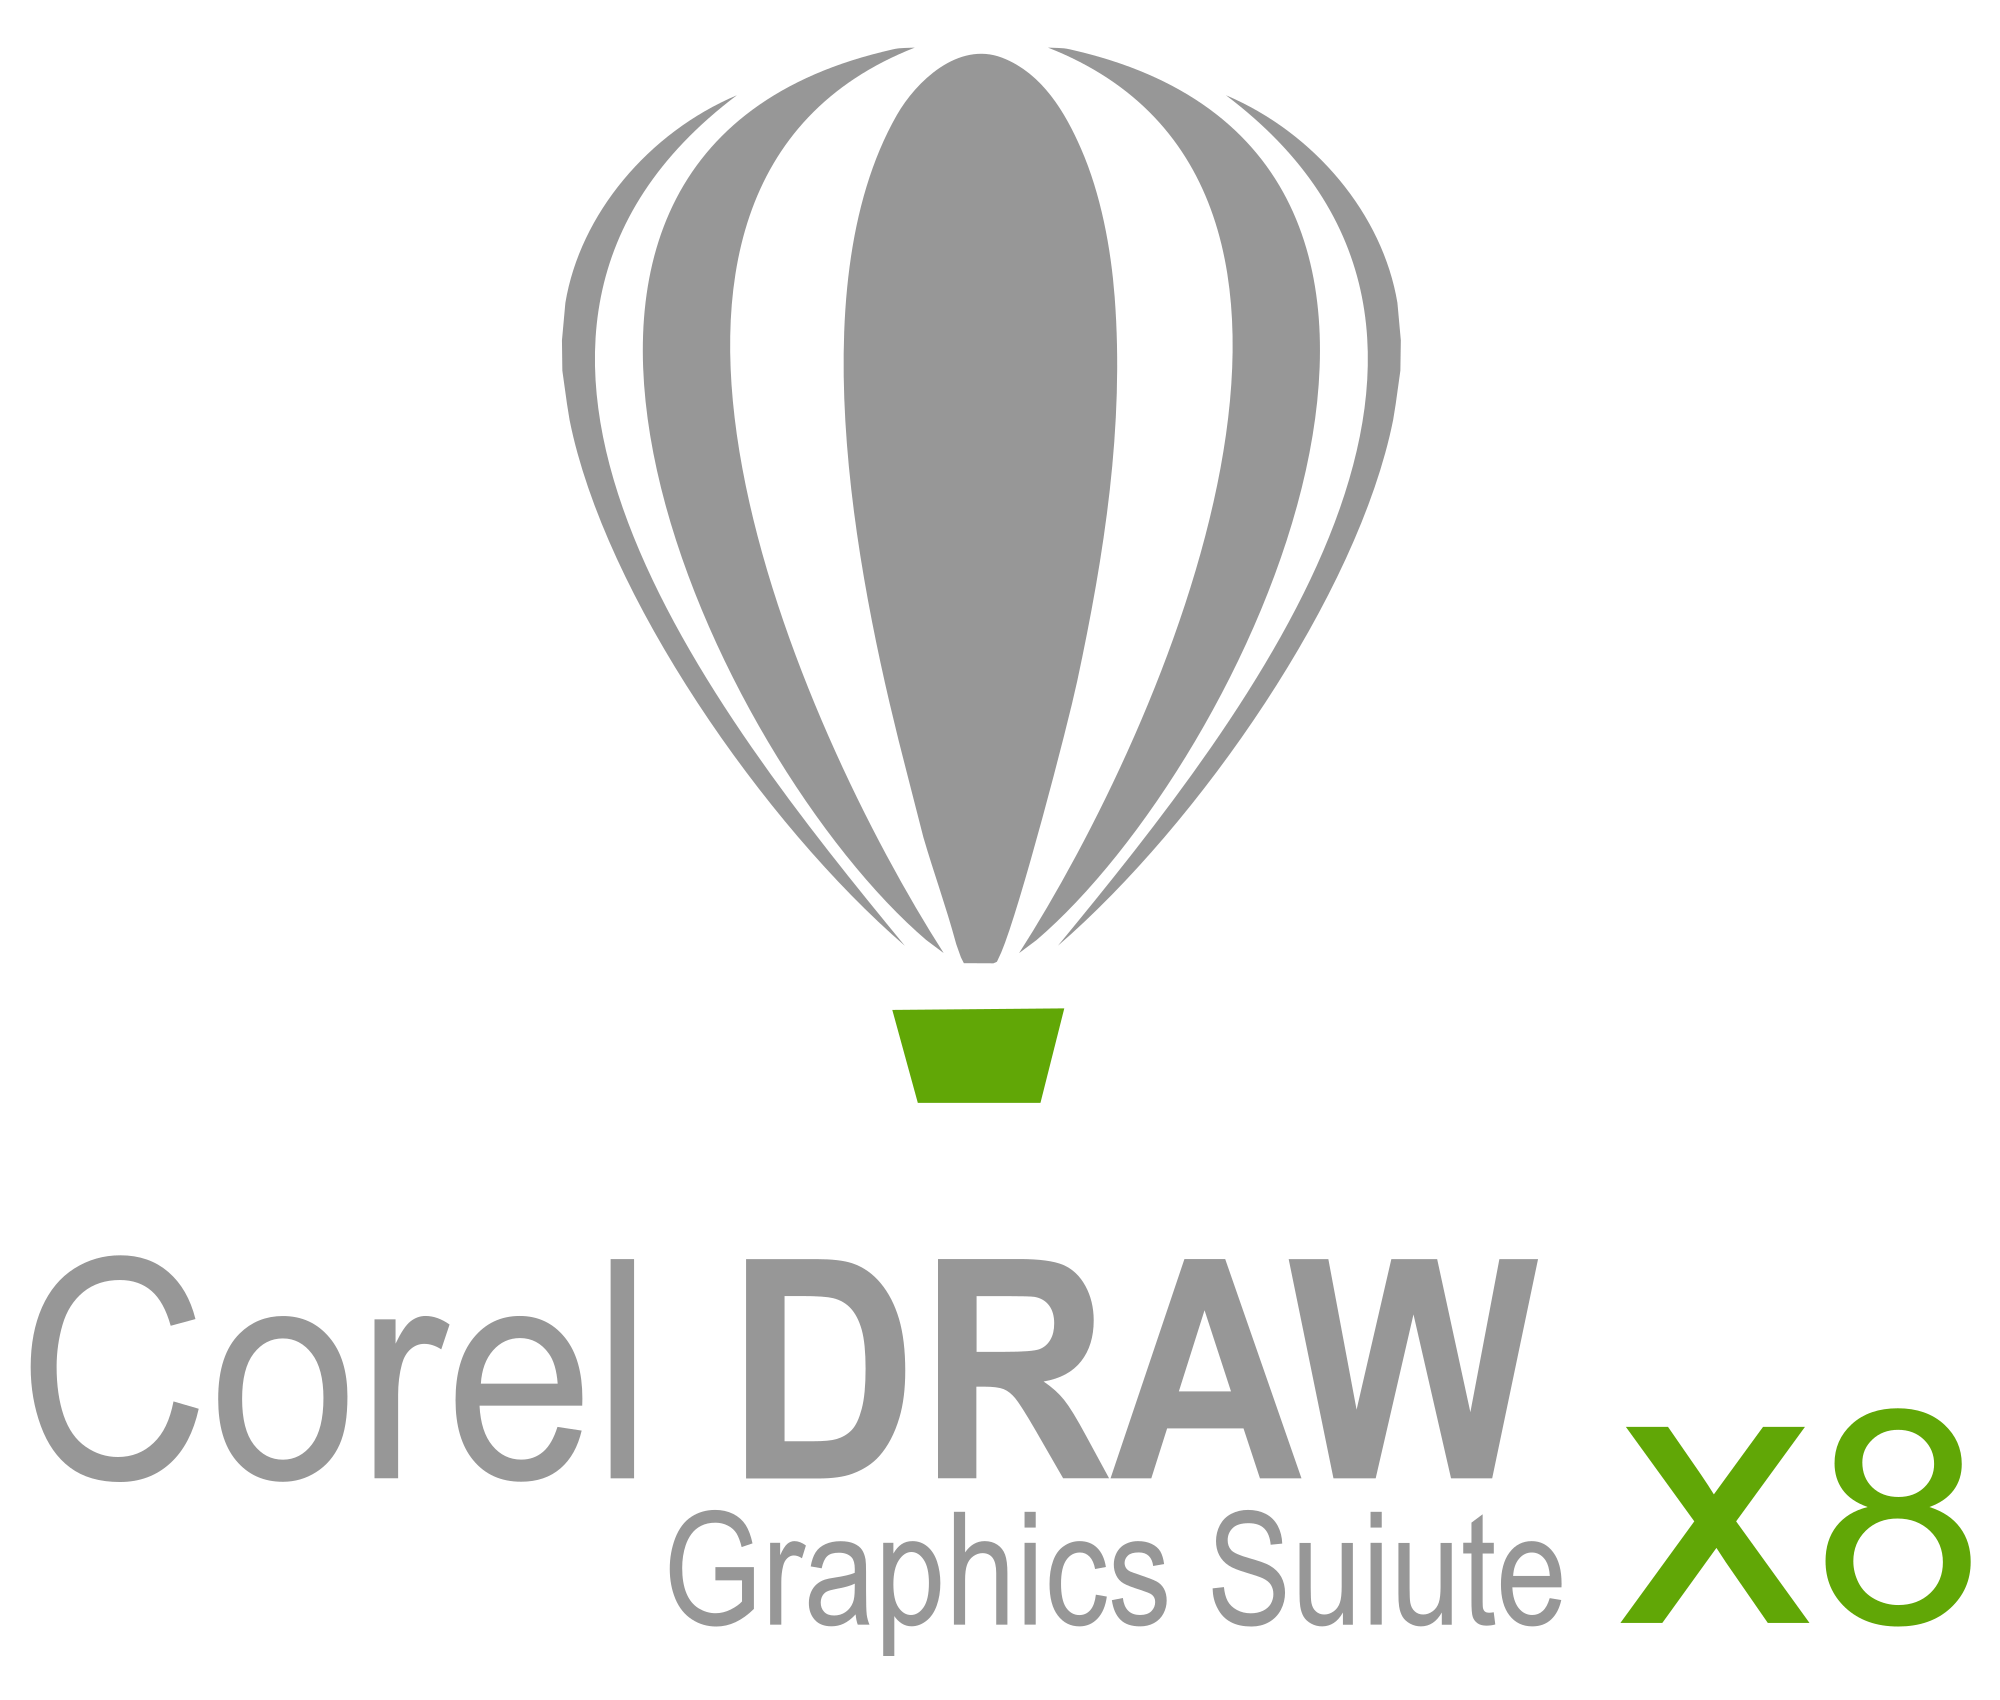 Corel Logo - CorelDraw logo.svg